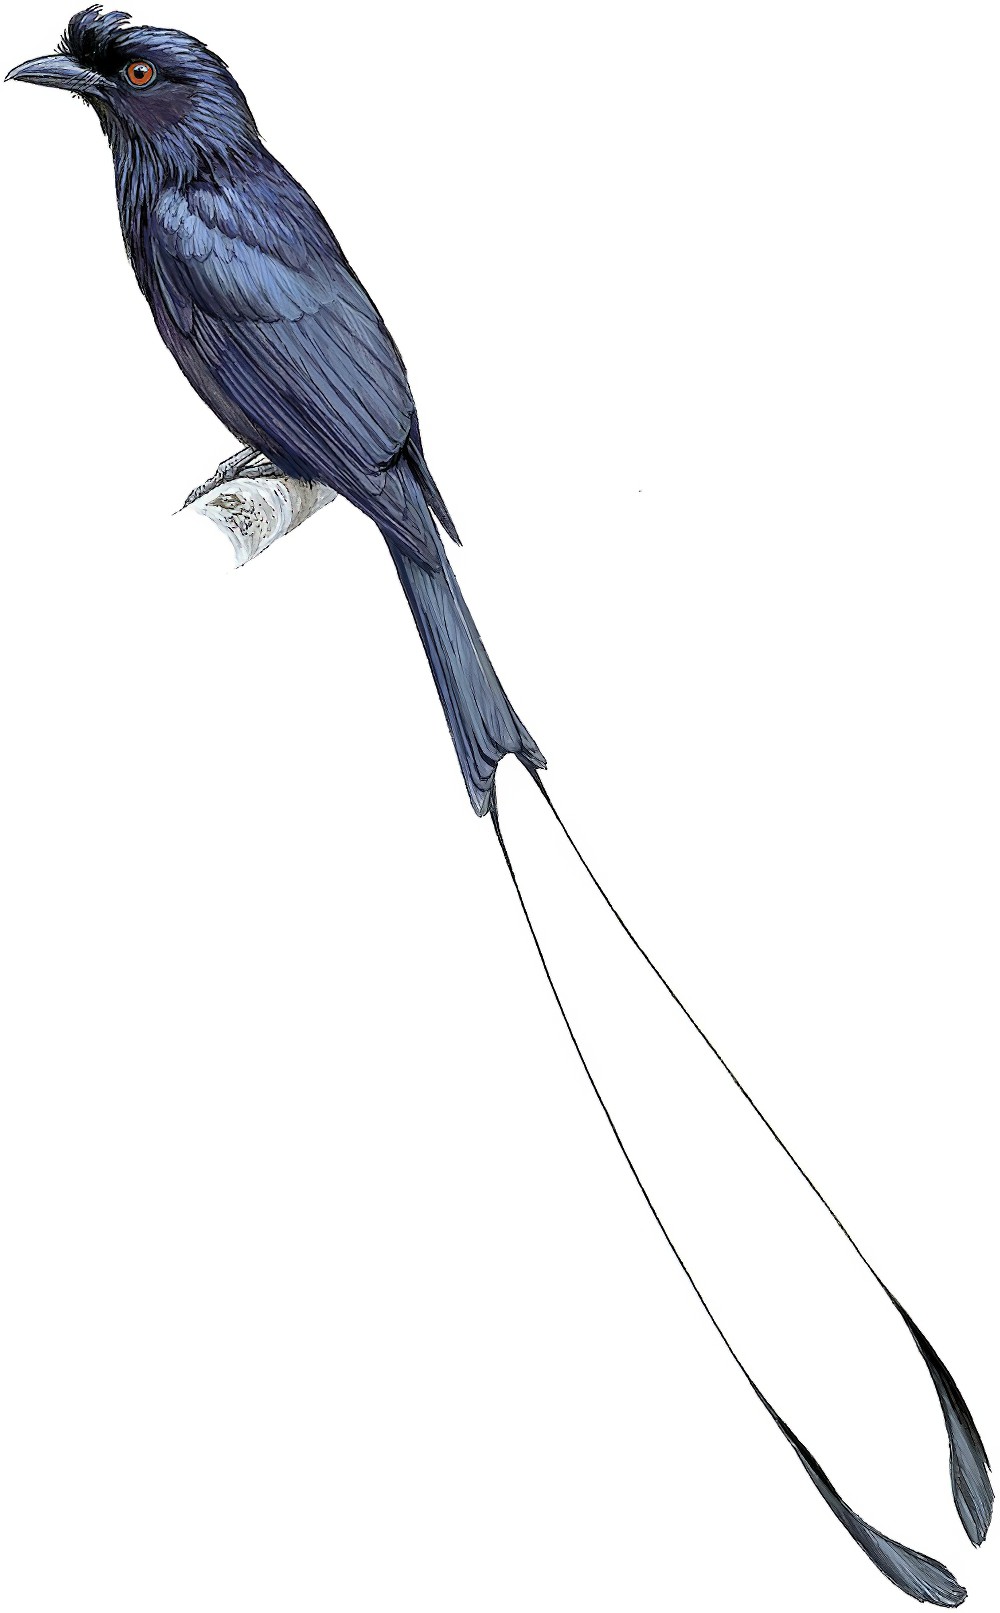 Greater Racket-tailed Drongo / Dicrurus paradiseus